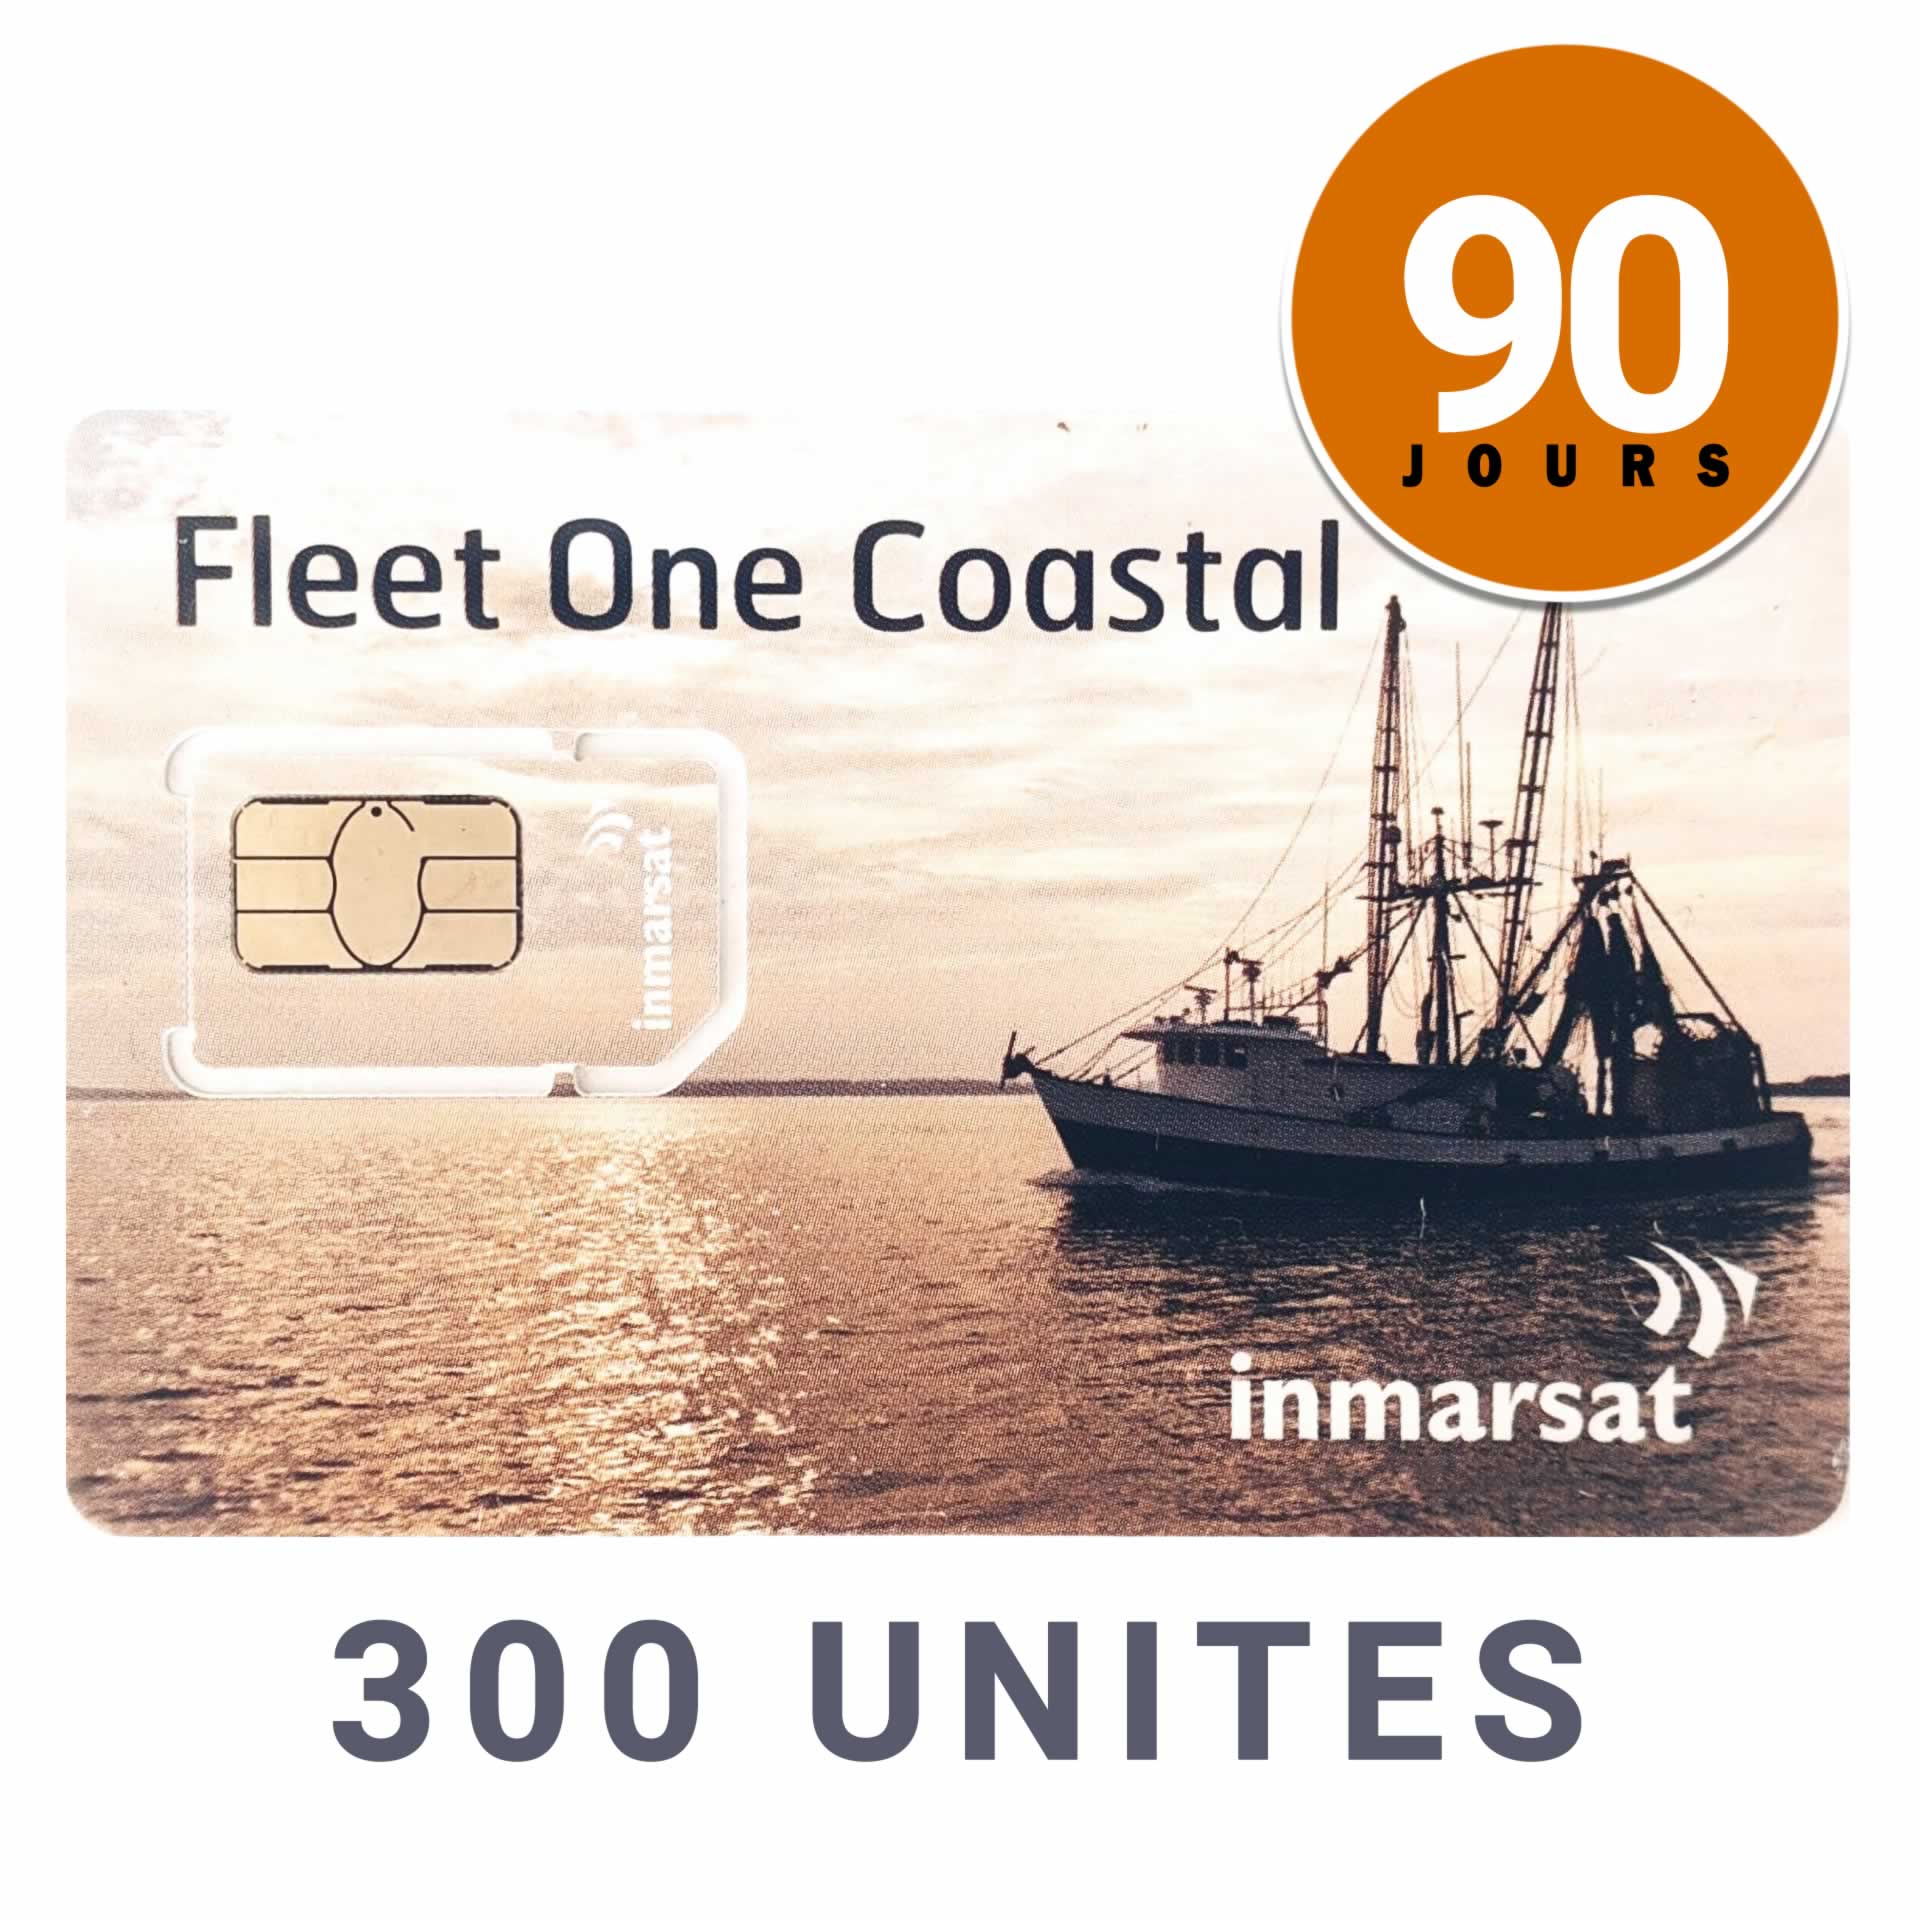 Carta prepagata INMARSAT Coast FLEET ONE ricaricabile - 300 UNITA' - 90 GIORNI